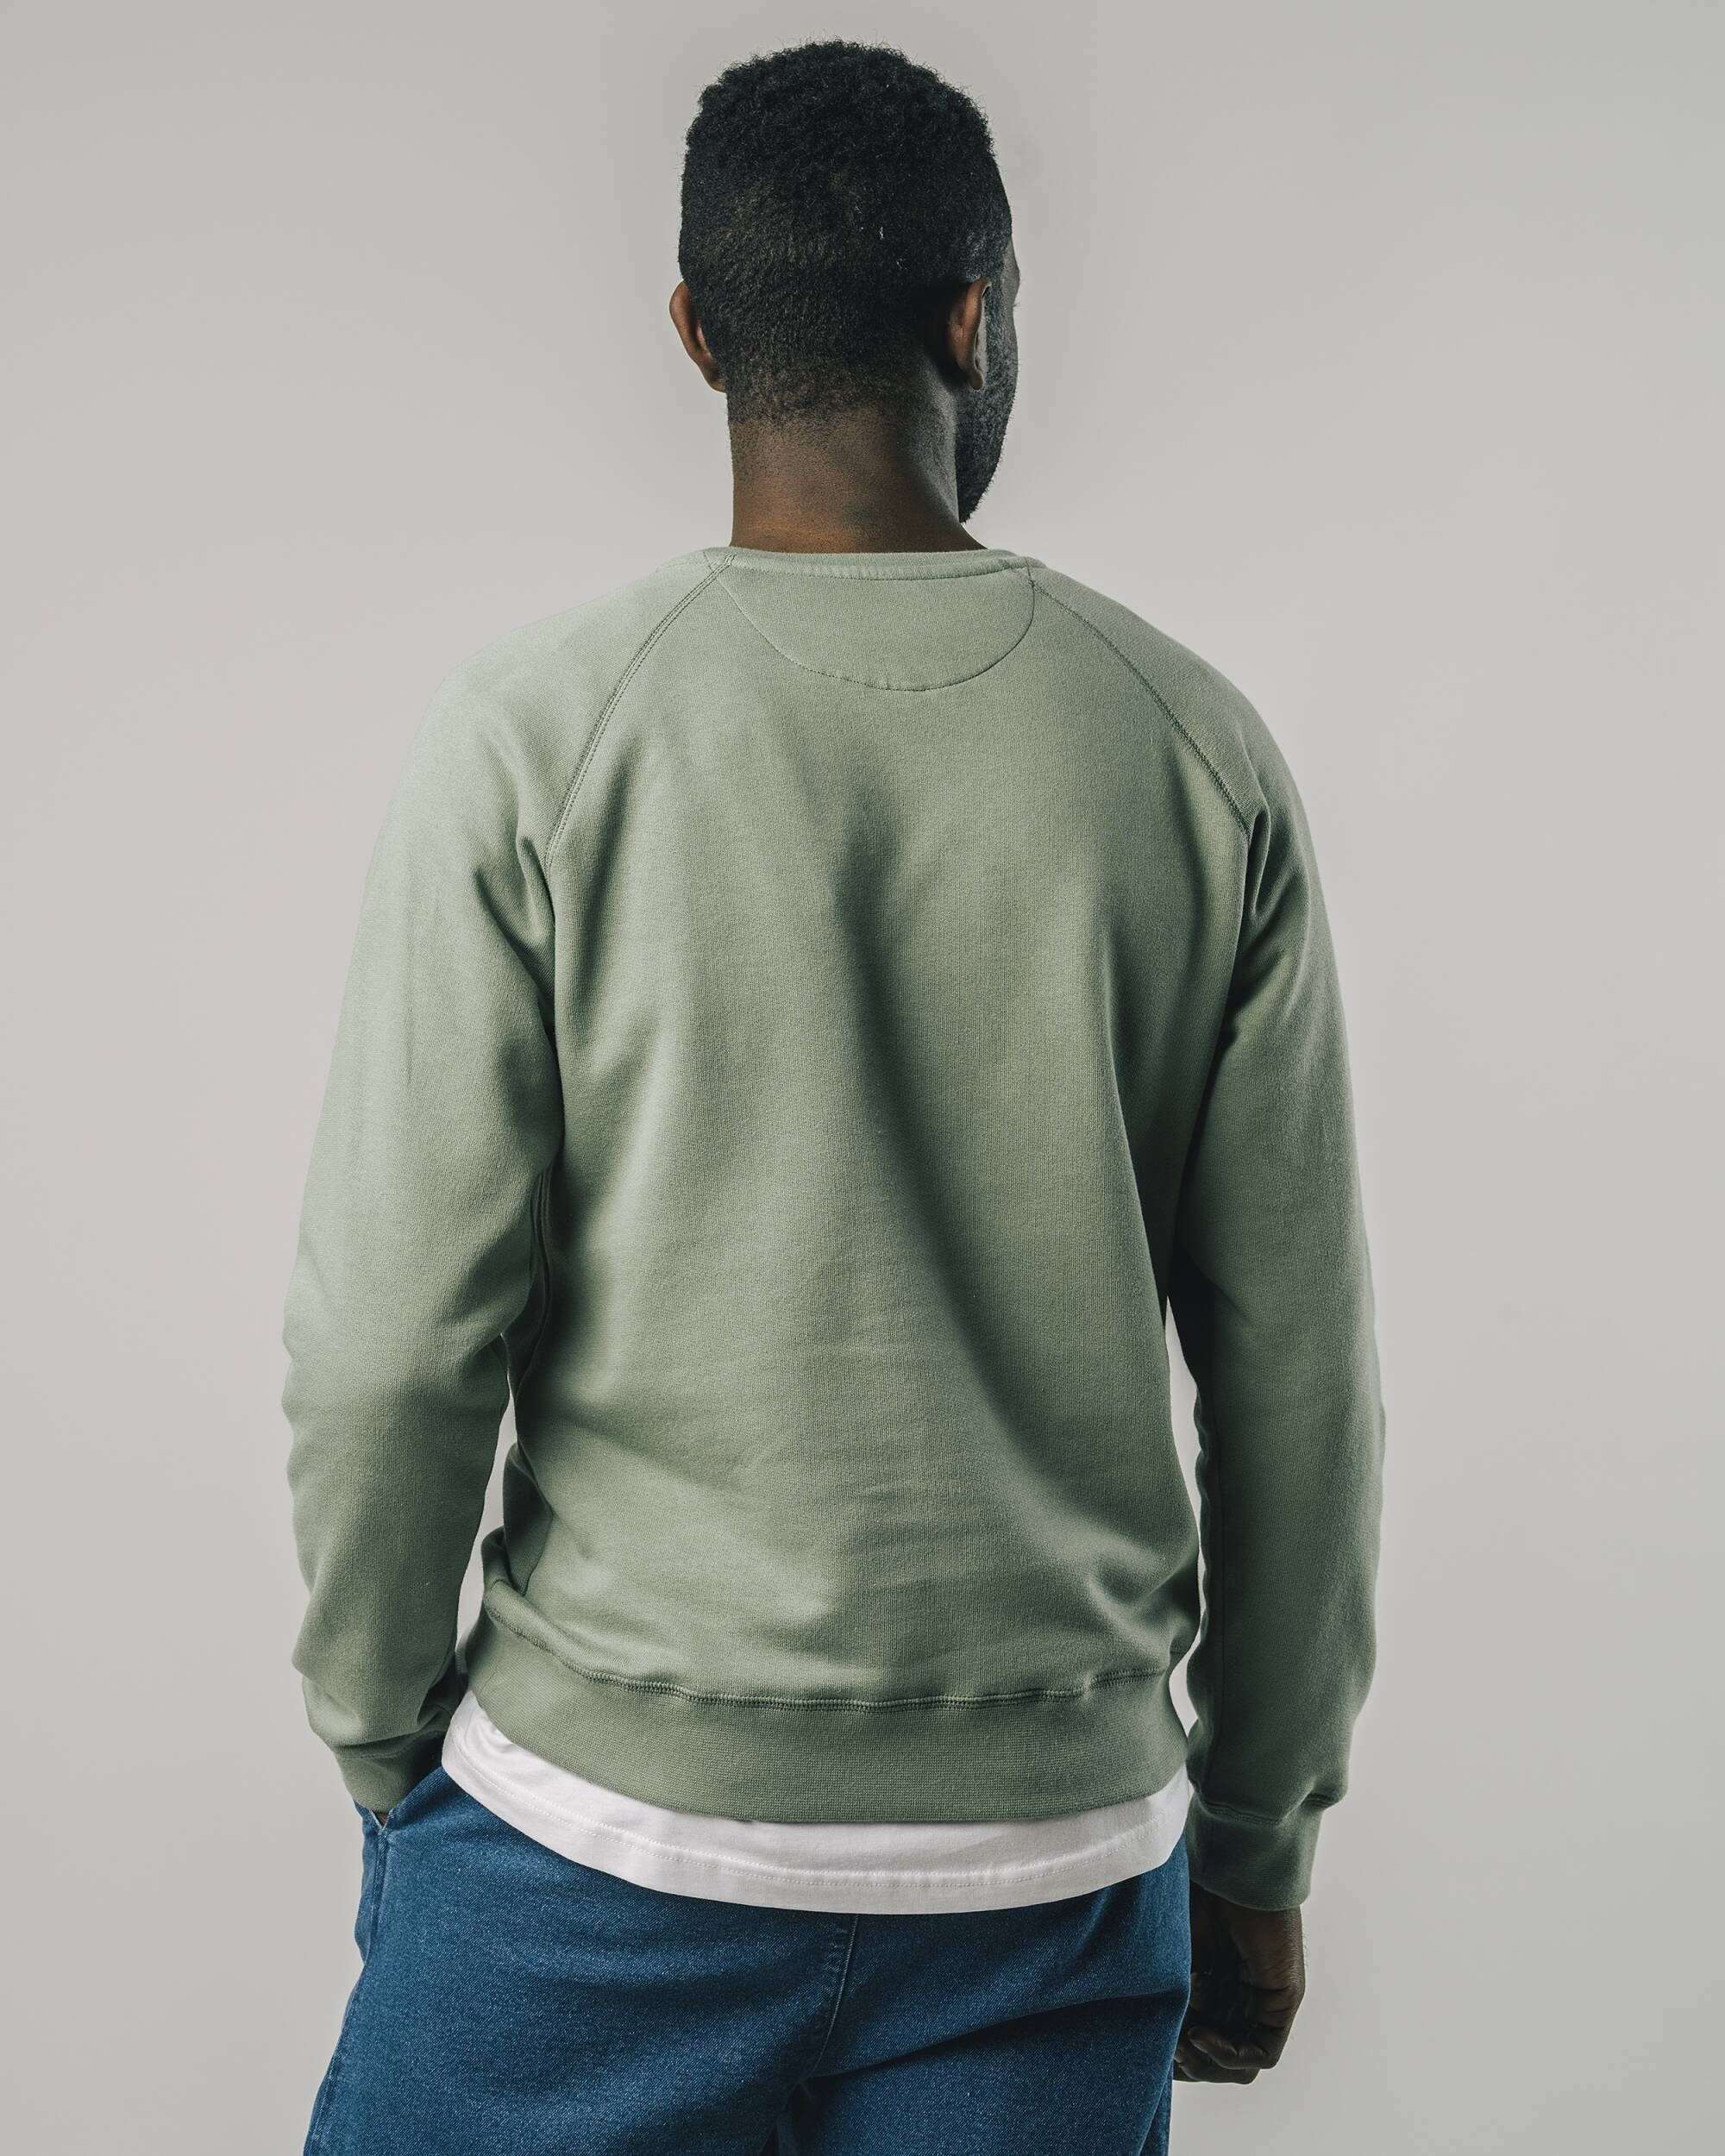 Sweatshirt "Twins" in green / kakhi made from 100% organic cotton from Brava Fabrics